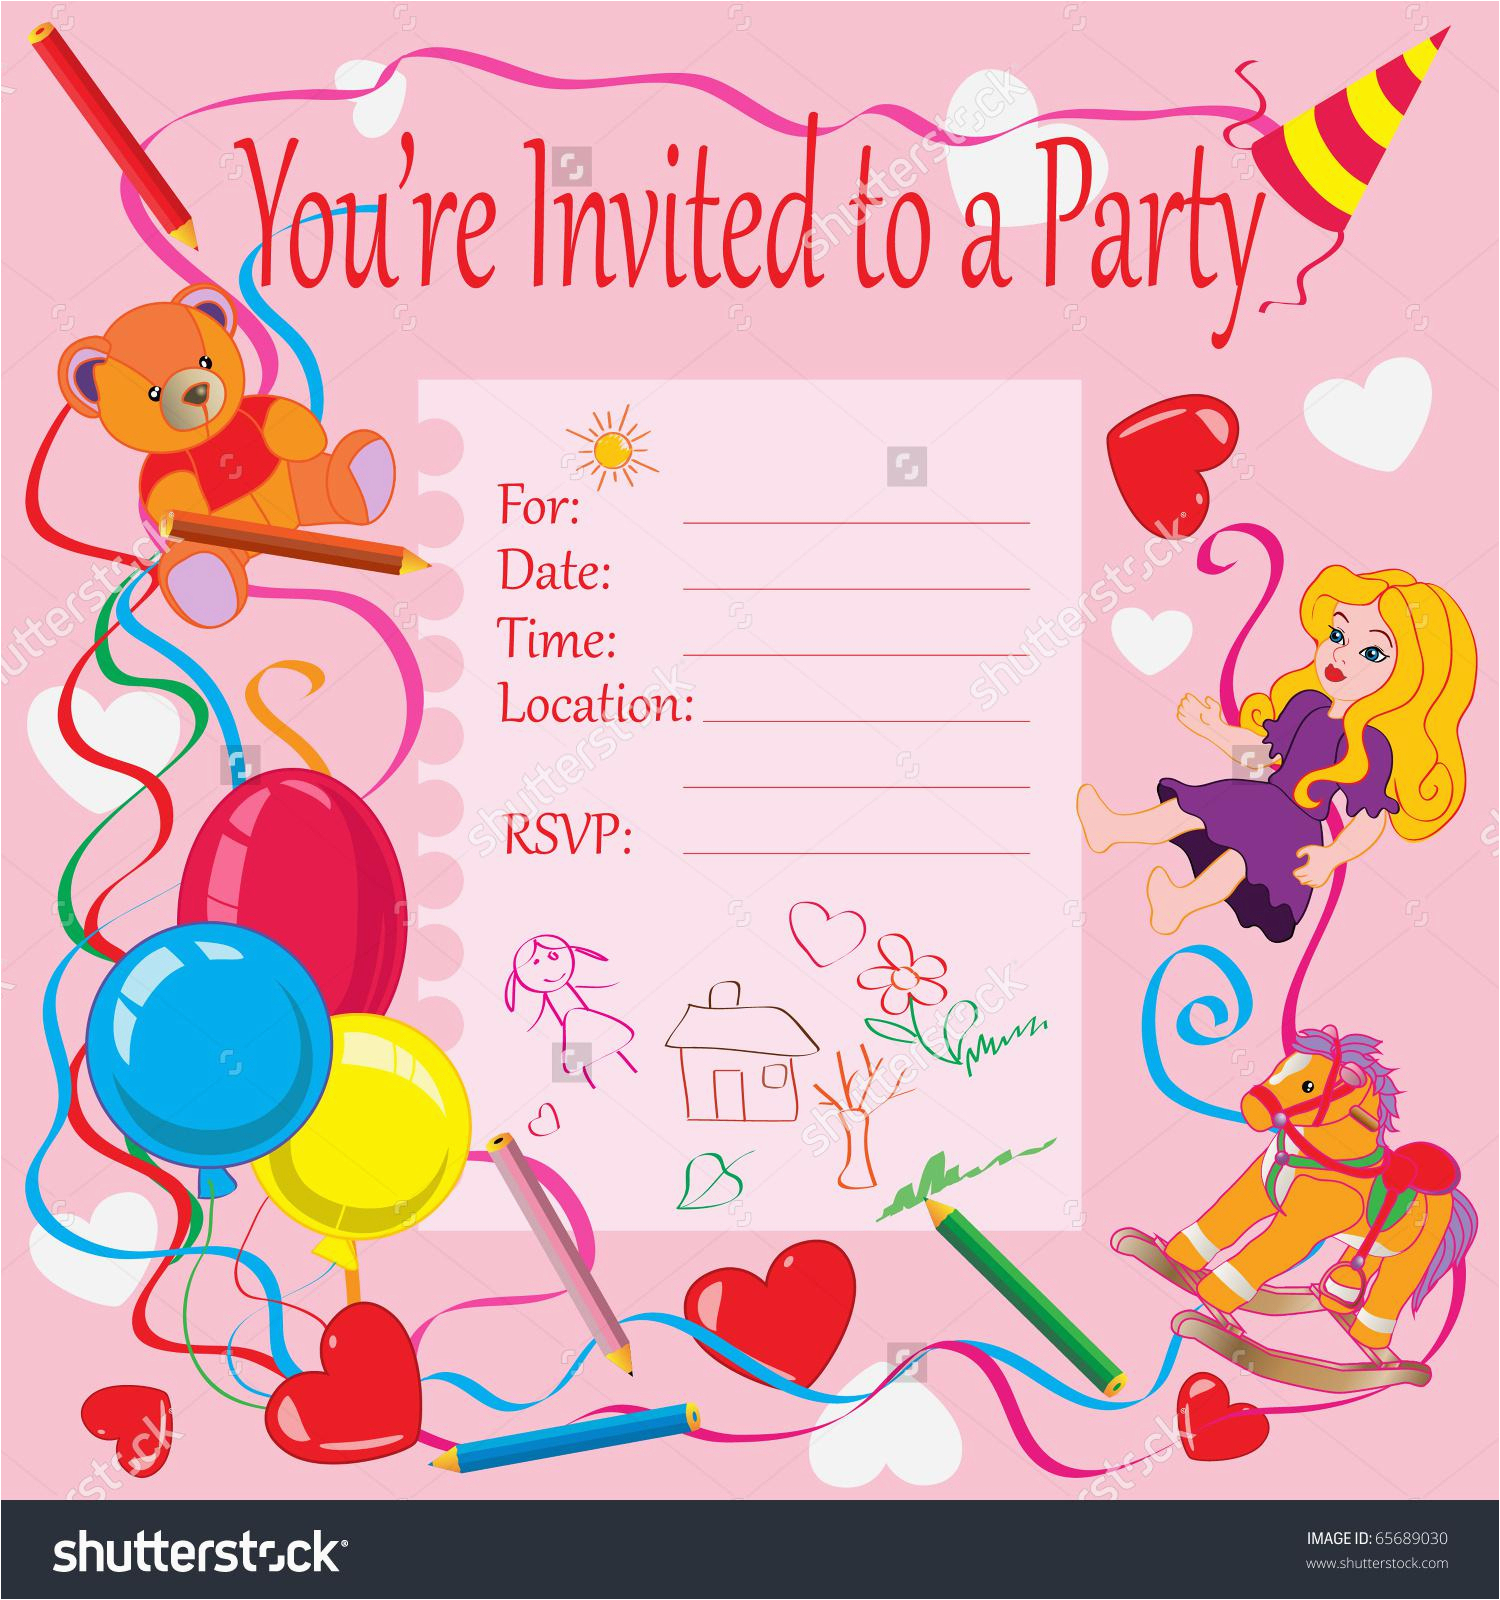 Print Your Own Birthday Invitations Free Make Your Own Birthday - Make Your Own Birthday Party Invitations Free Printable